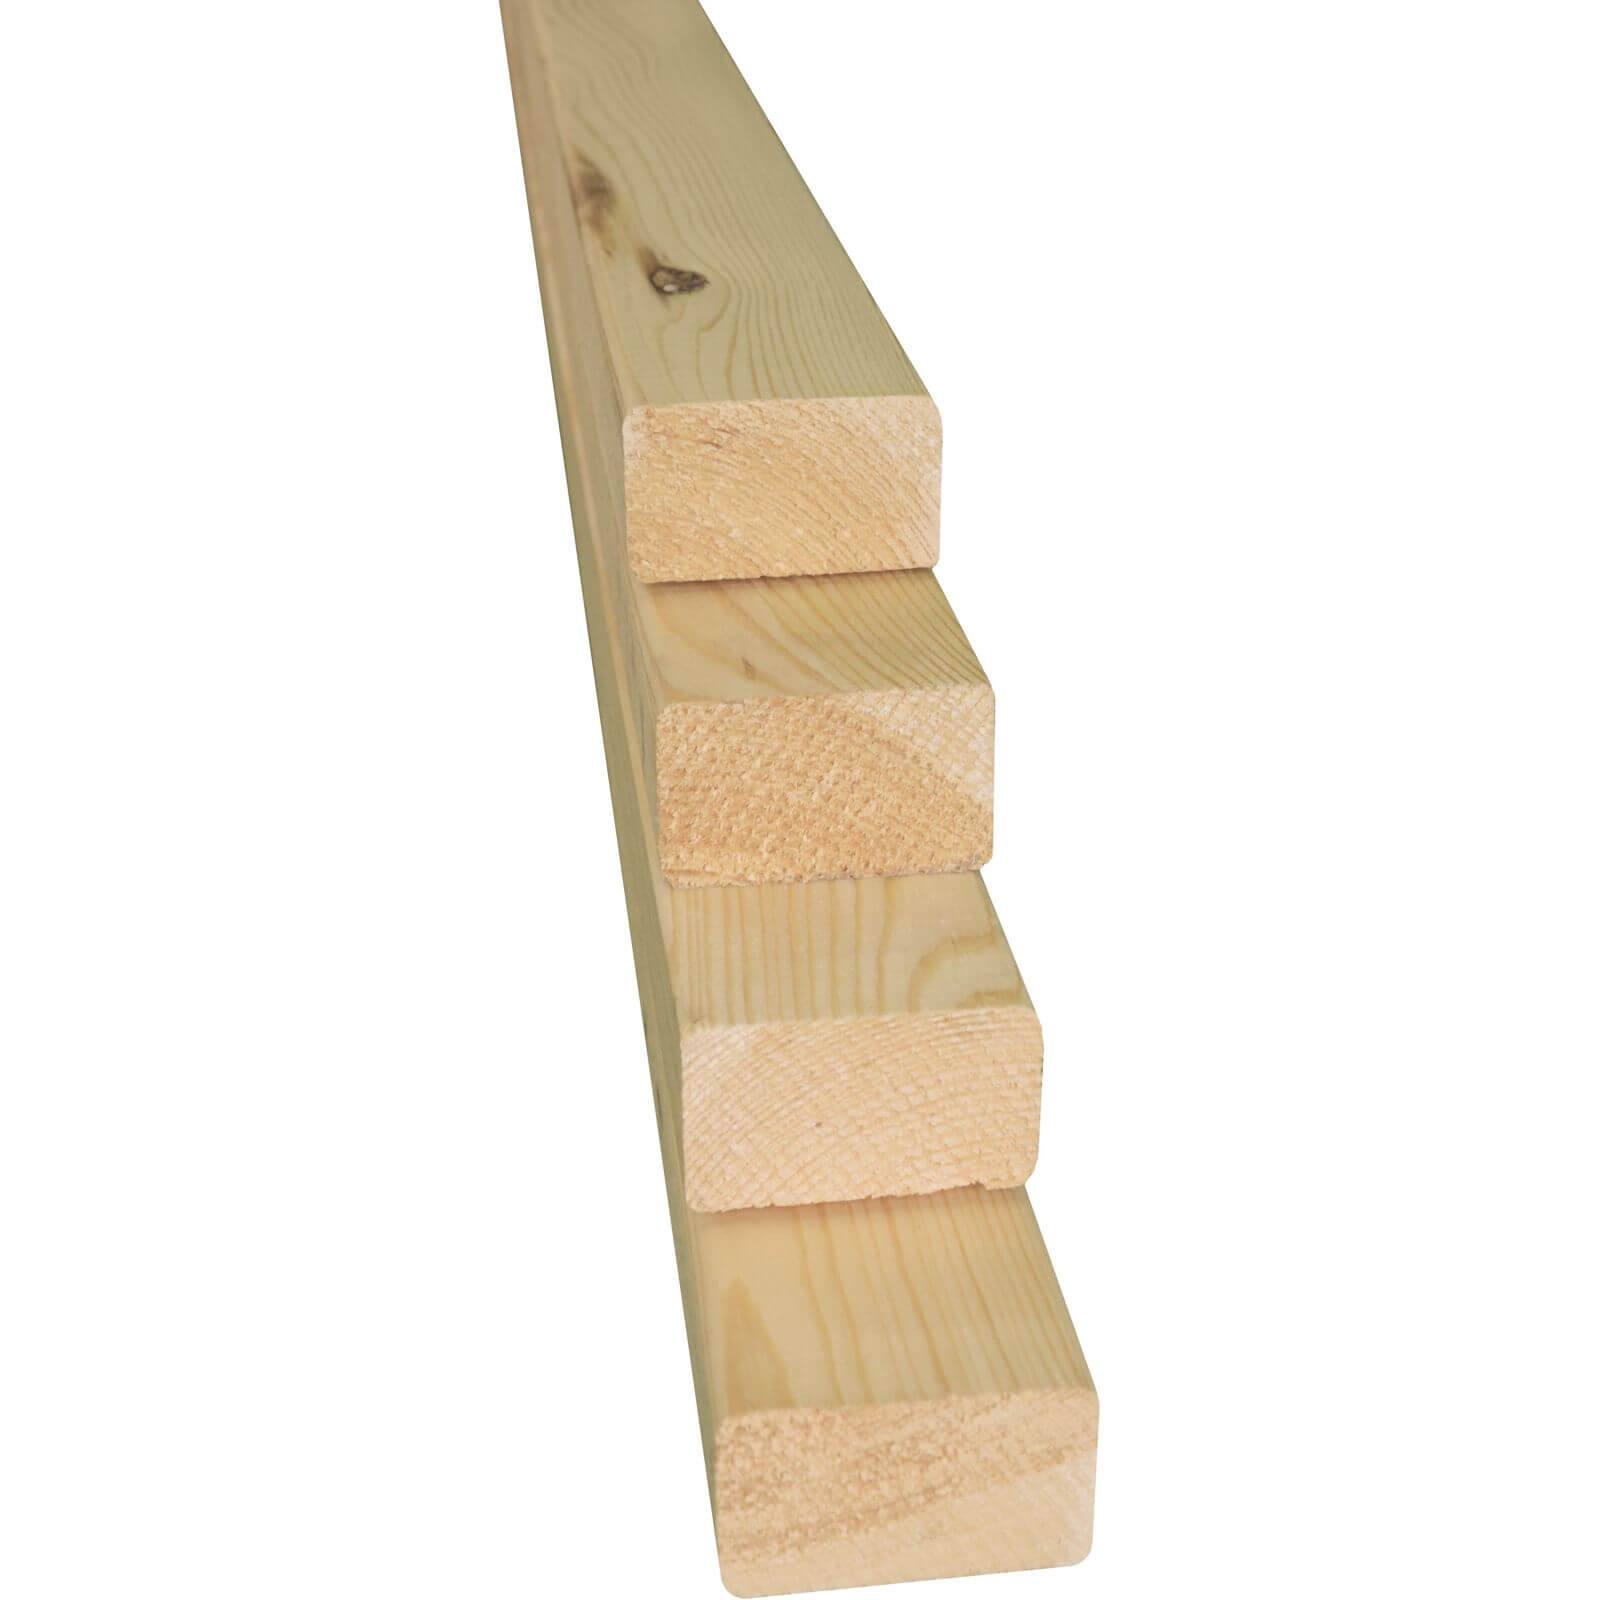 Metsa CLS Internal Studwork Whitewood Stick Timber 2.4m (38 x 63 x 2400mm)